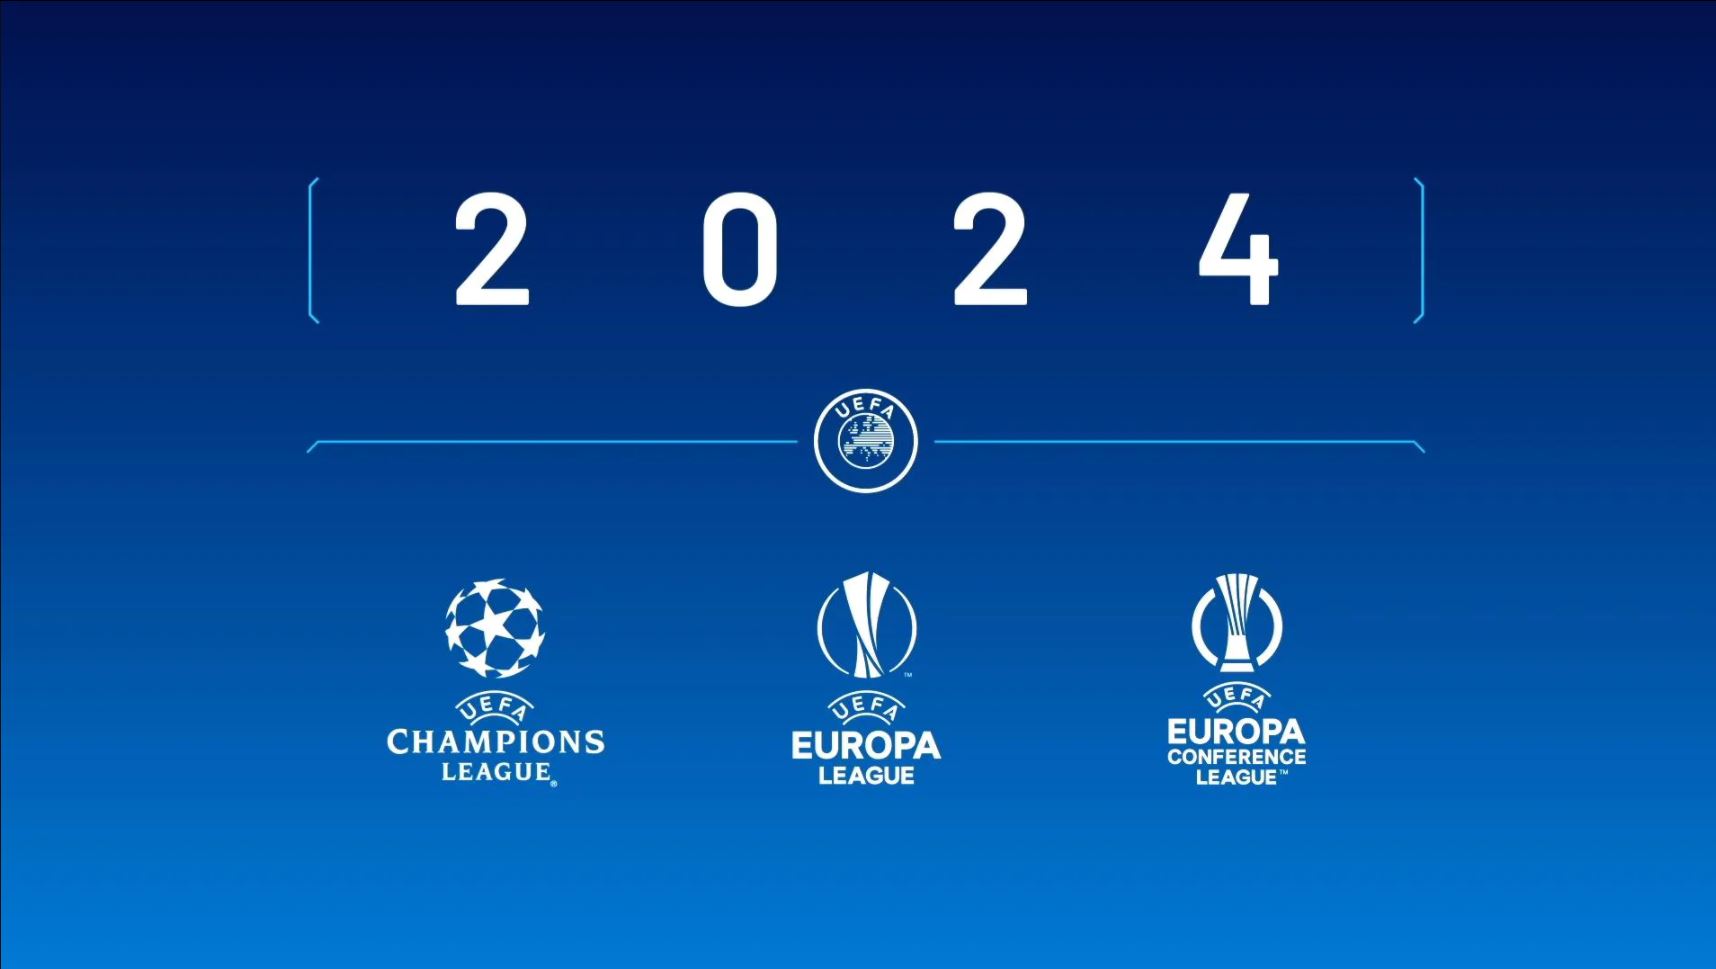 European Super League Bikin Heboh, UEFA Siapkan Kompetisi dan Format Baru